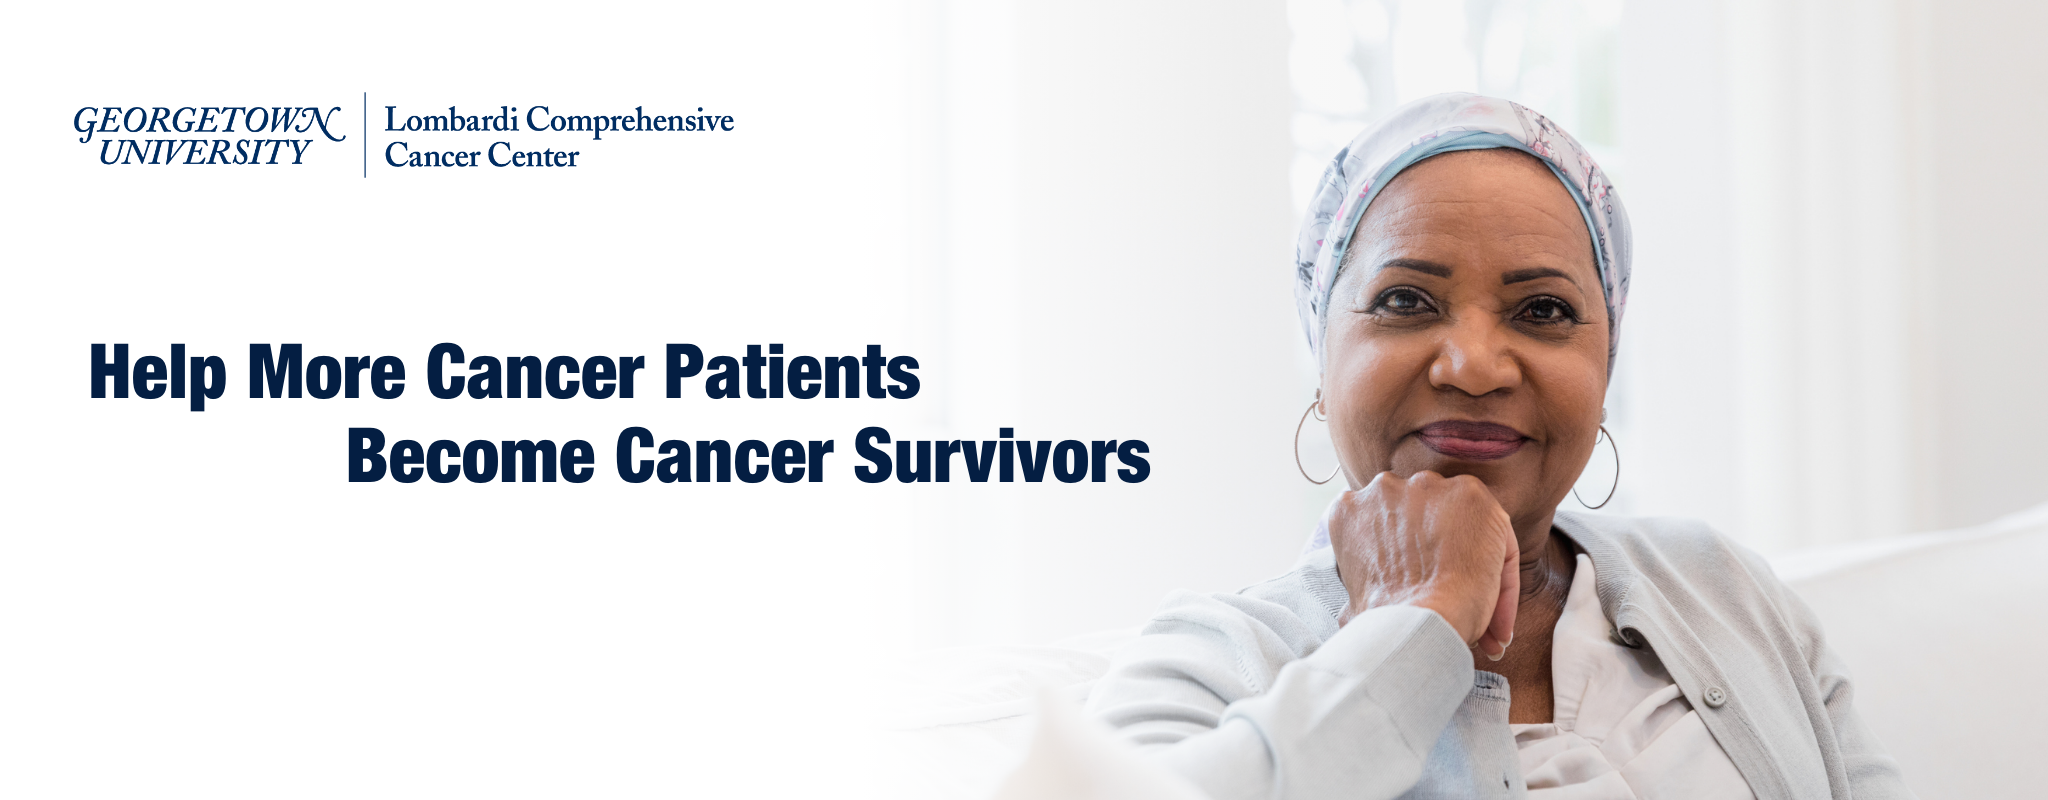 Help More Cancer Patients Become Cancer Survivors